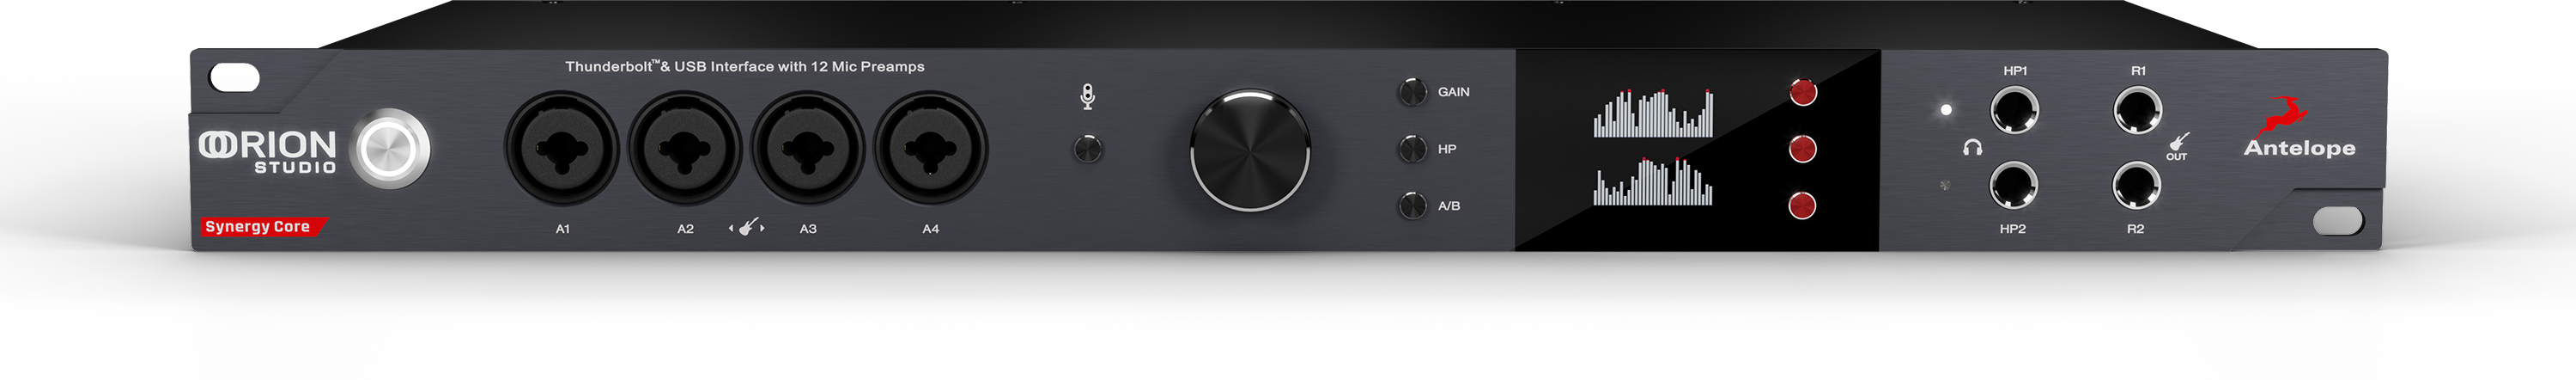 Antelope Audio Orion Studio Synergy Core - Thunderbolt audio-interface - Main picture